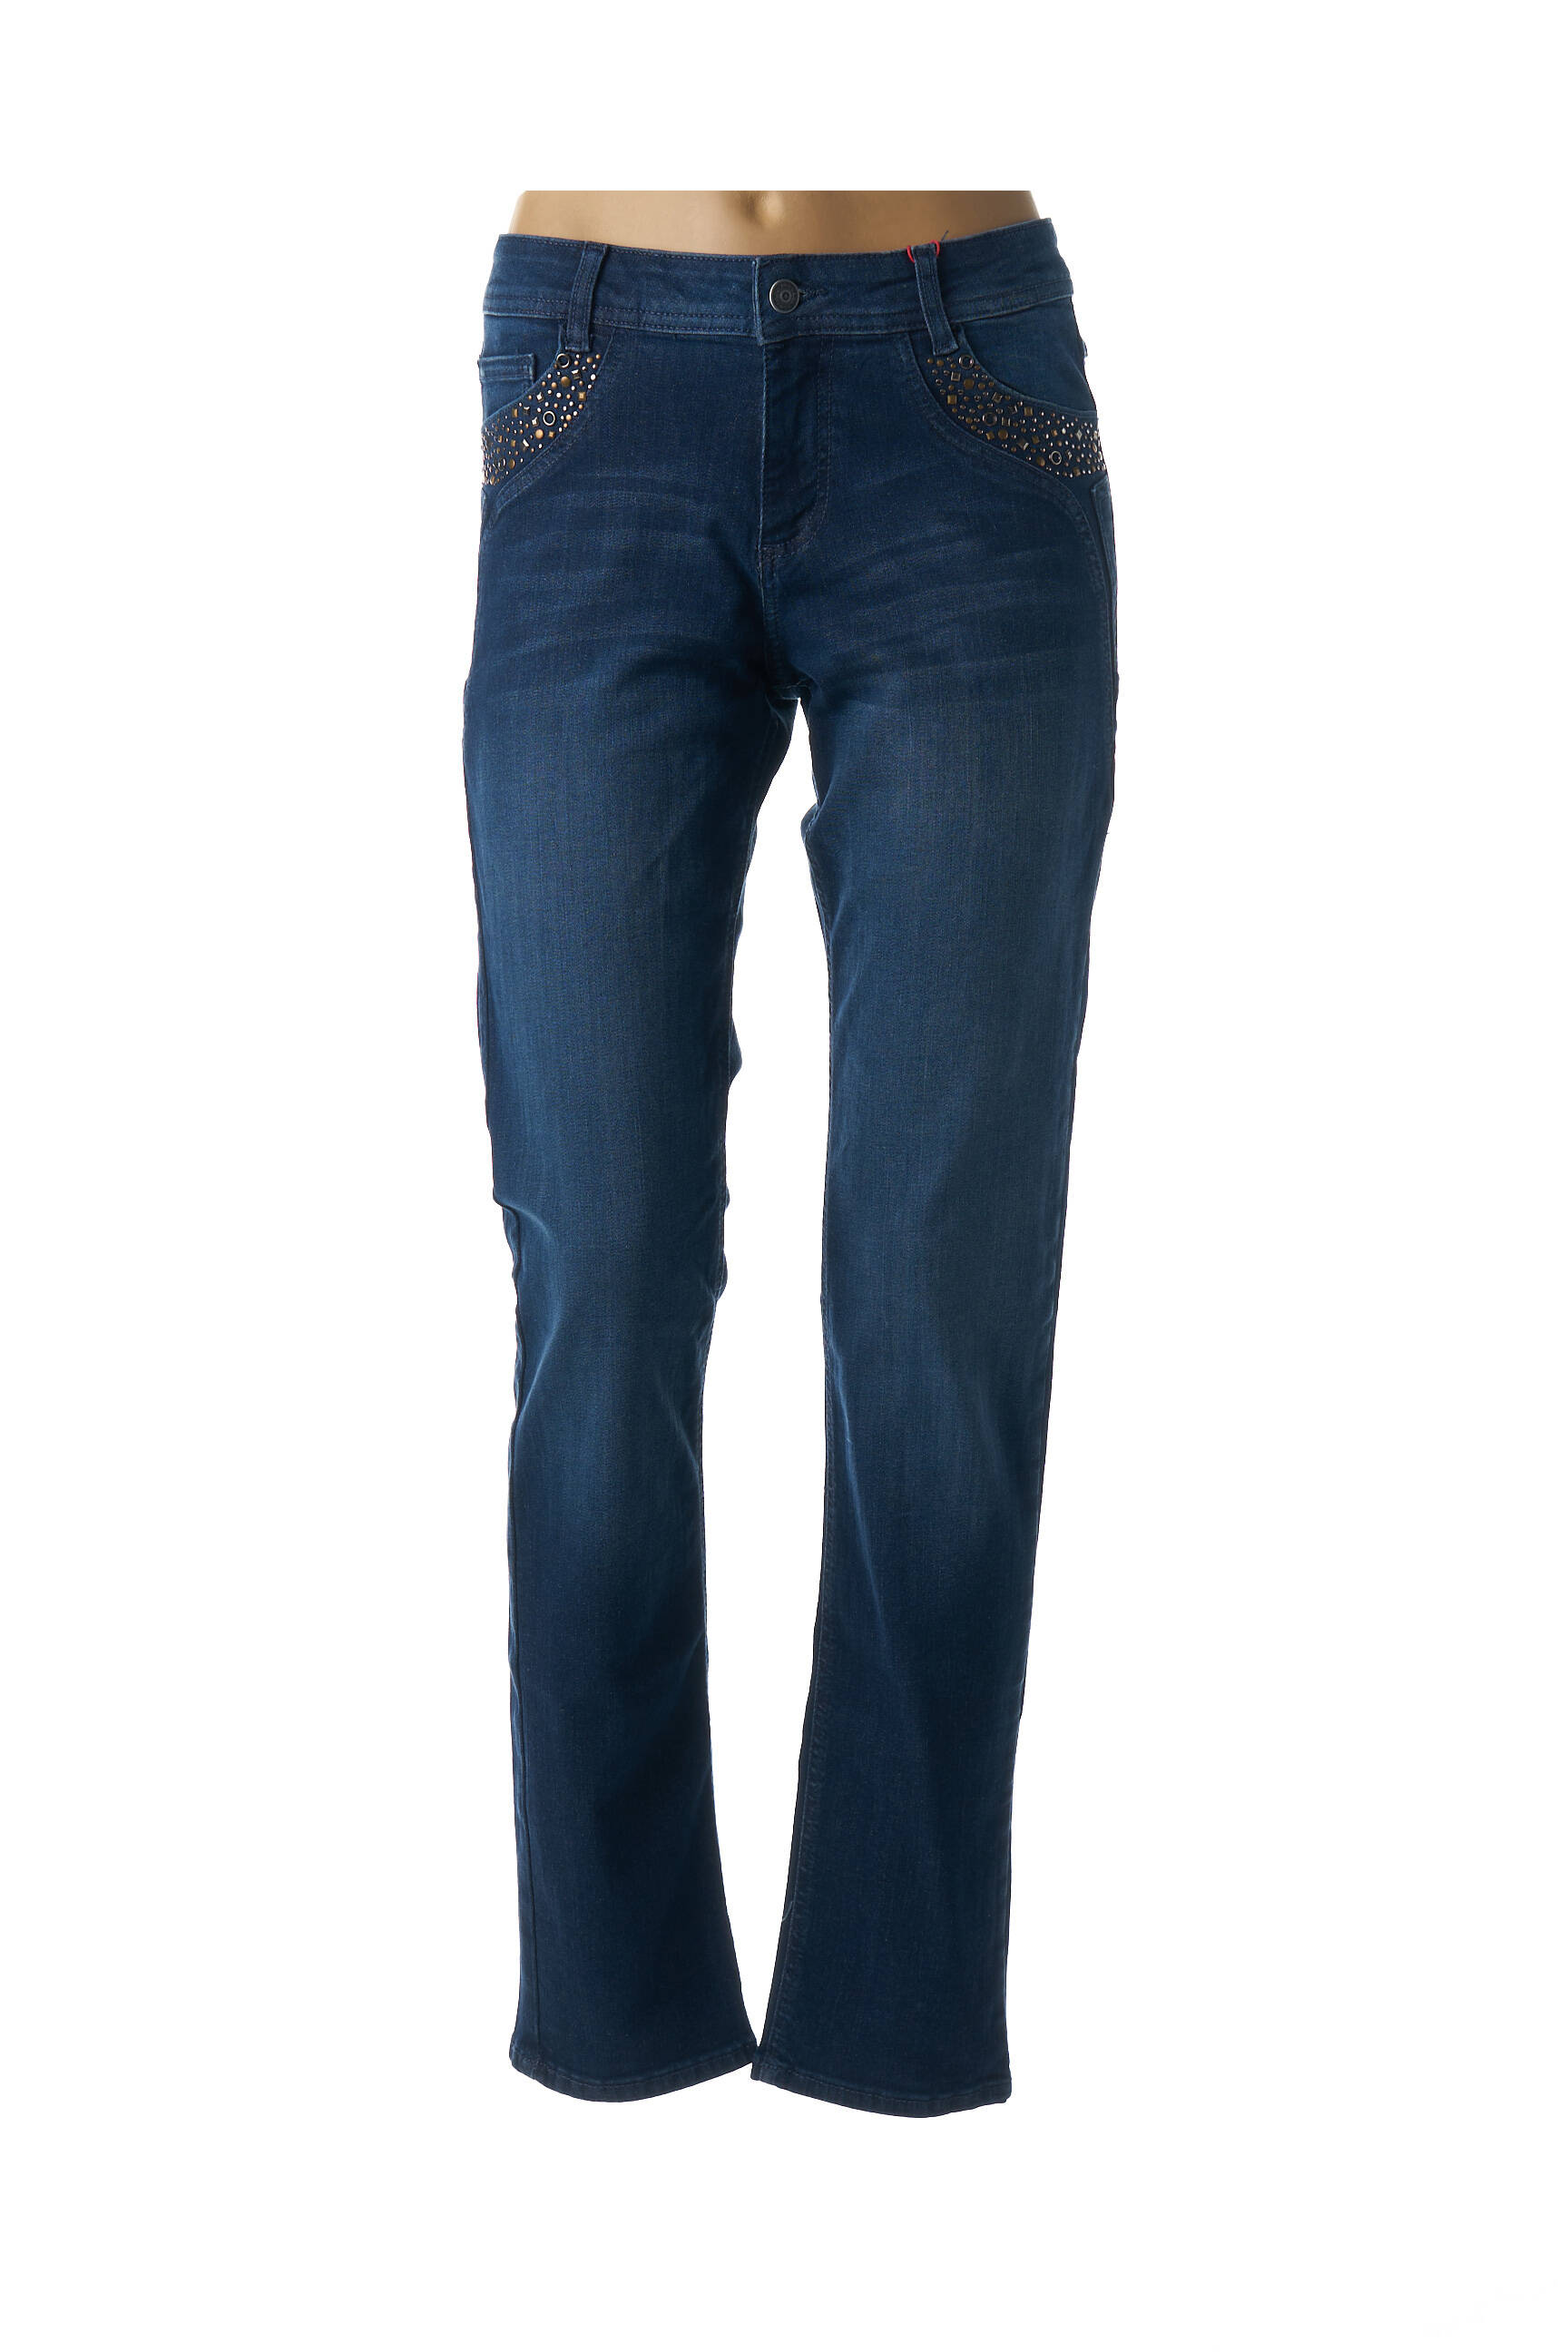 Mode Jeans Jeans coupe-droite s.Oliver Jeans coupe-droite bleu style d\u00e9contract\u00e9 